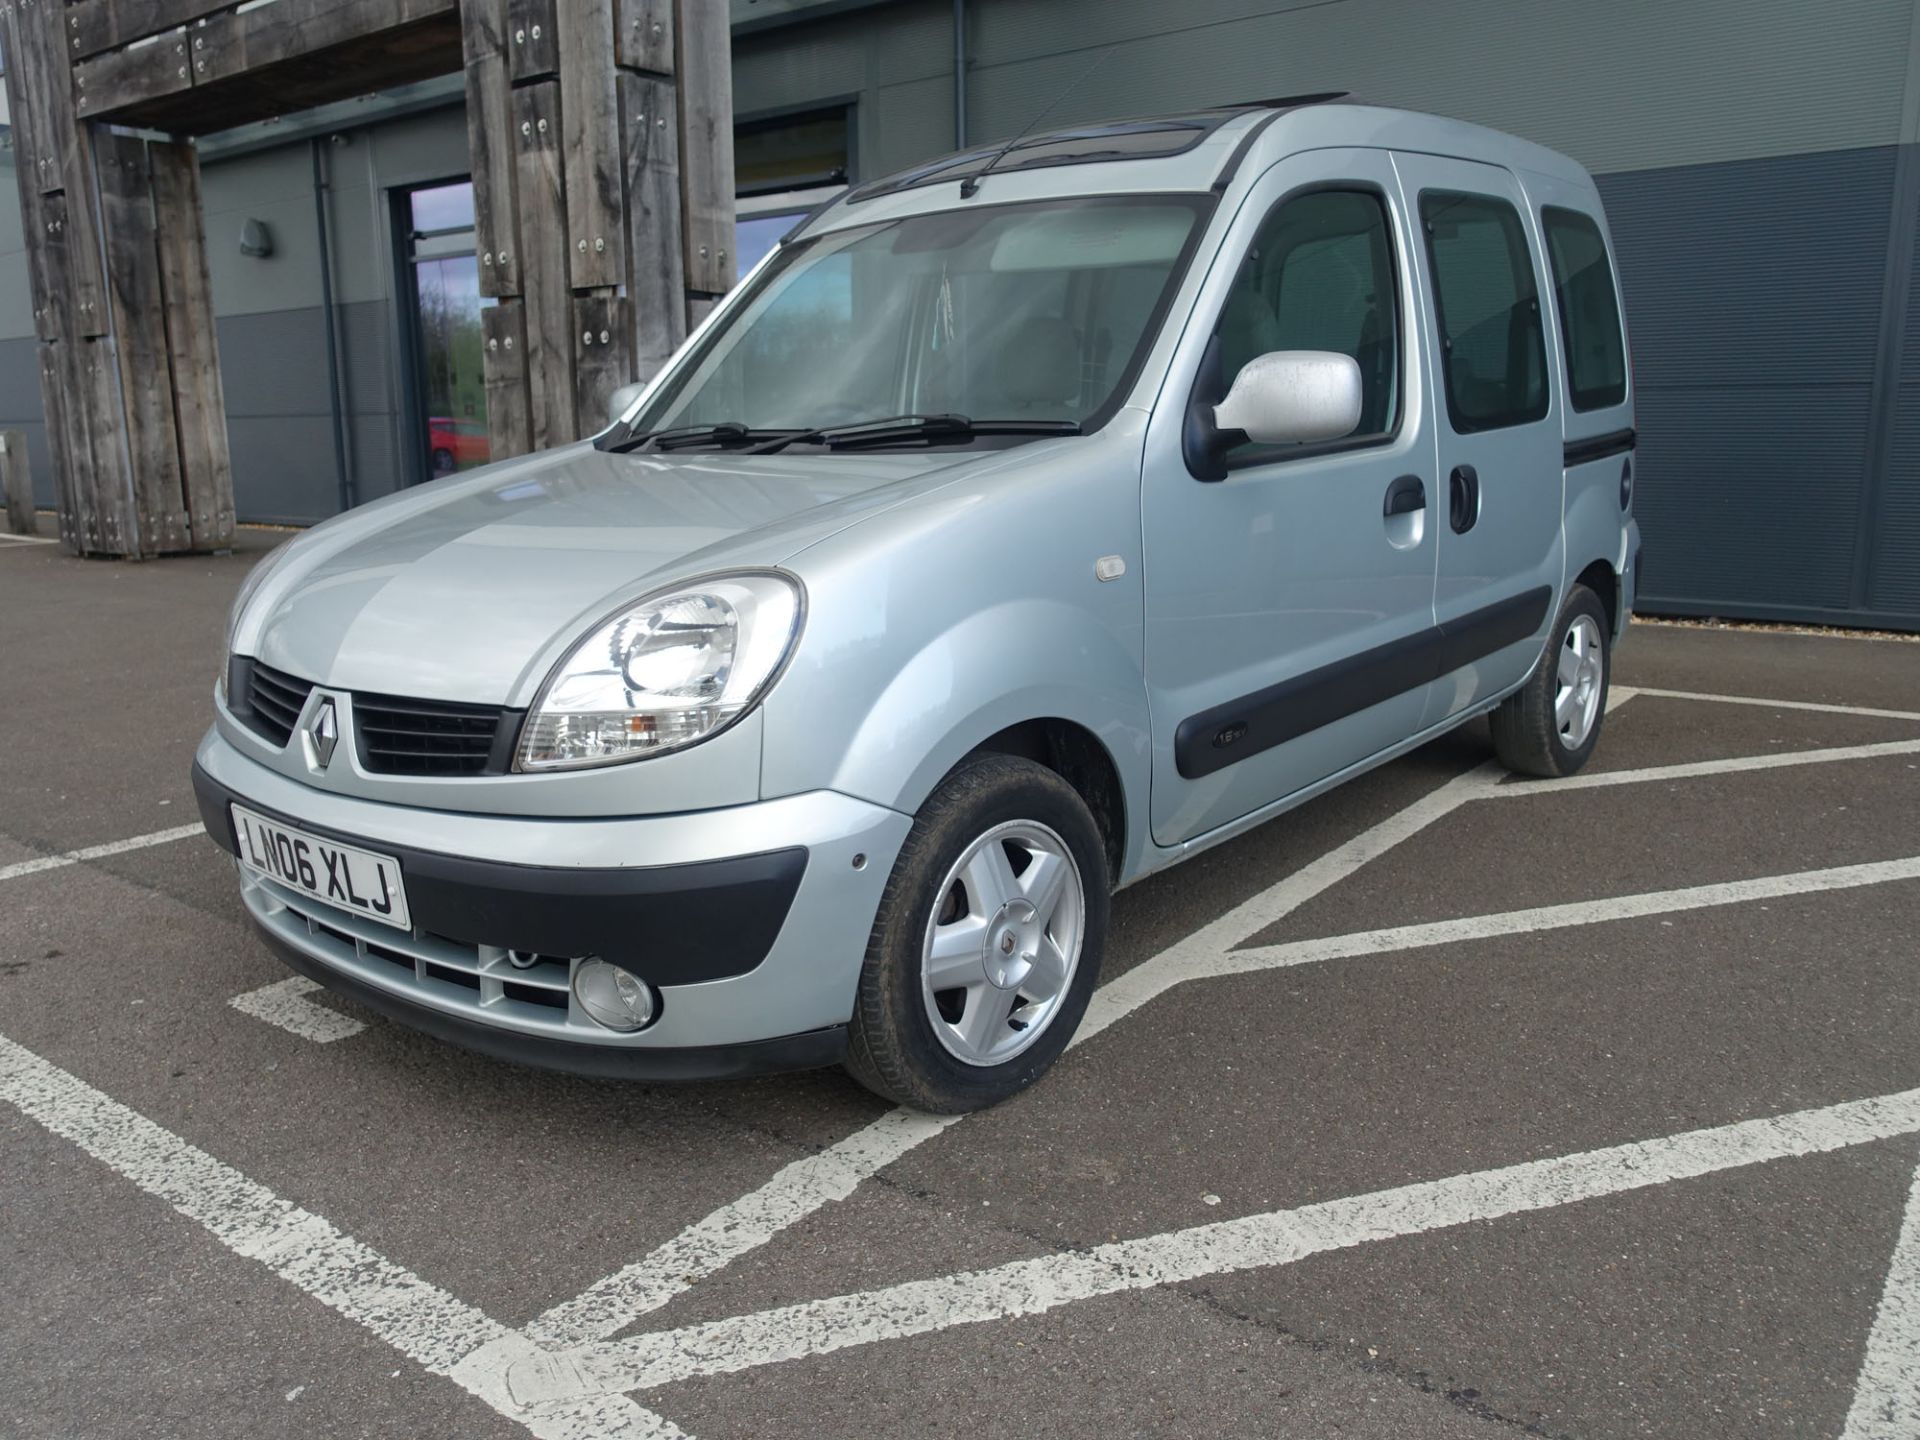 (2006) Renault Kango Expression automatic MPV, petrol, 1598cc, grey, MOT: 8/8/2021, two keys, V5 - Image 13 of 14